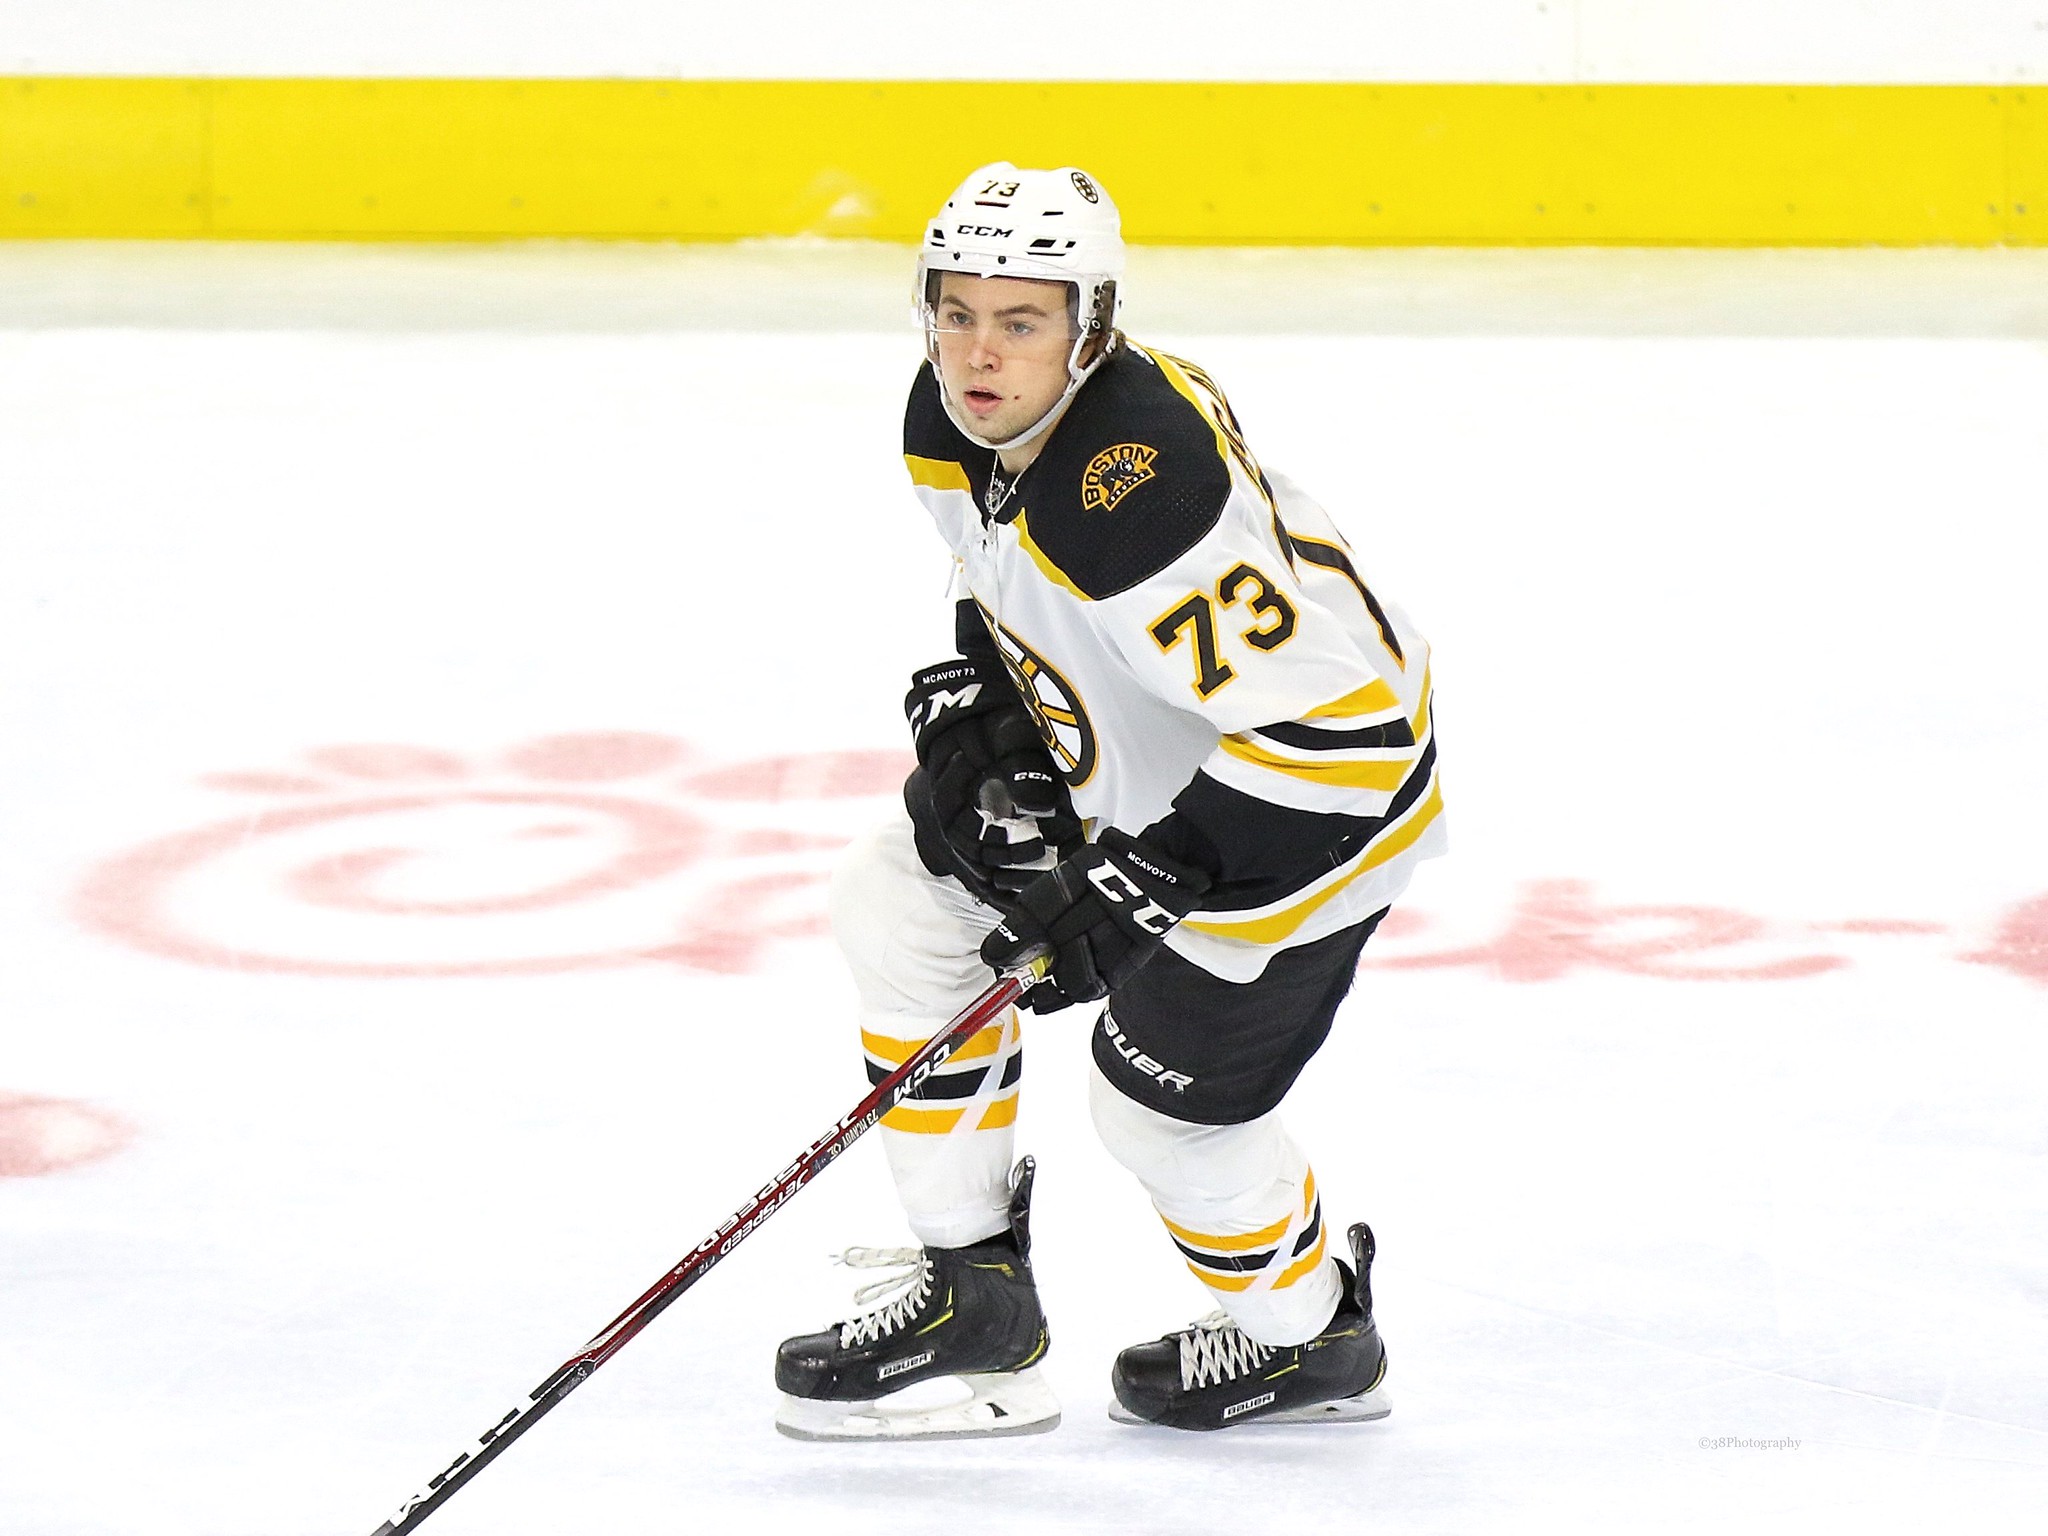 Will Patrice Bergeron retire? Hockey world awaits Bruins legend's decision